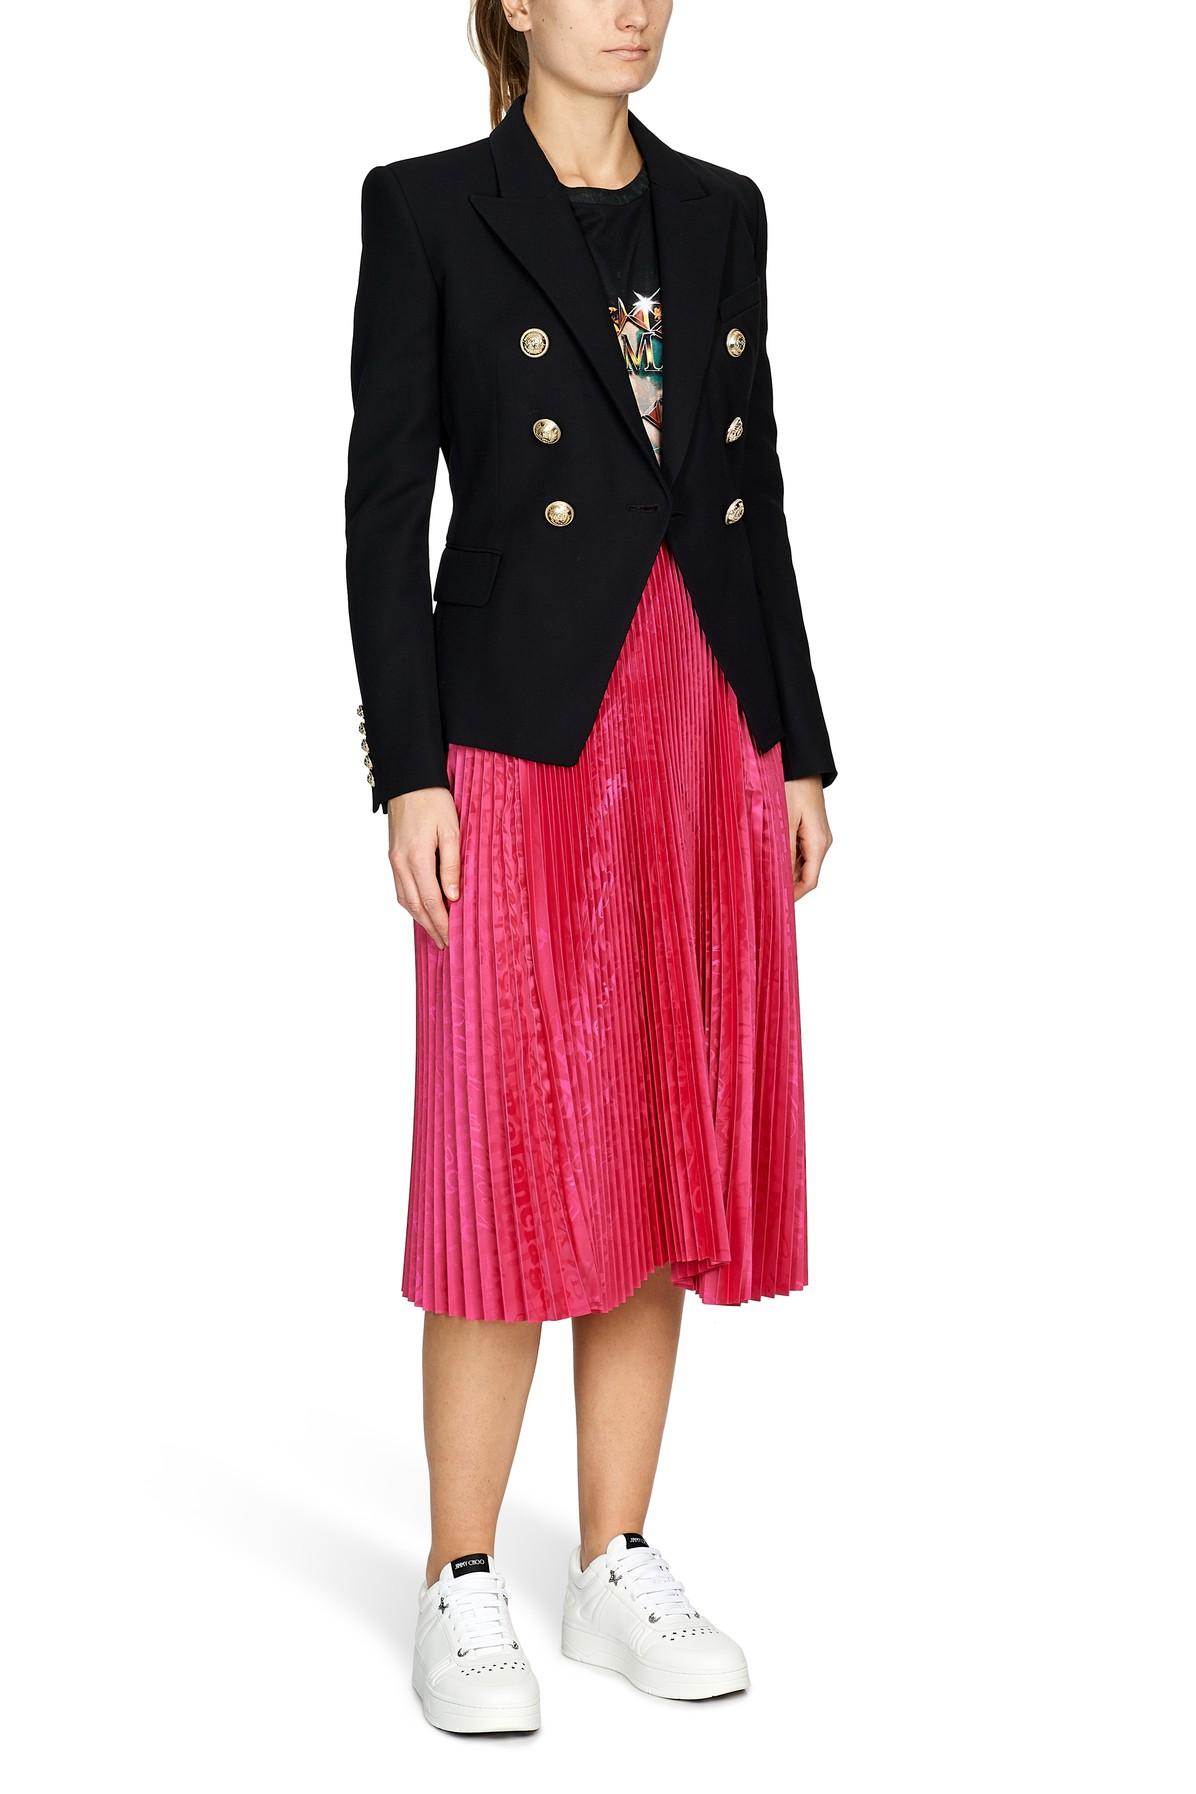 Balenciaga Kick Pleated Skirt in Fuchsia (Red) - Lyst